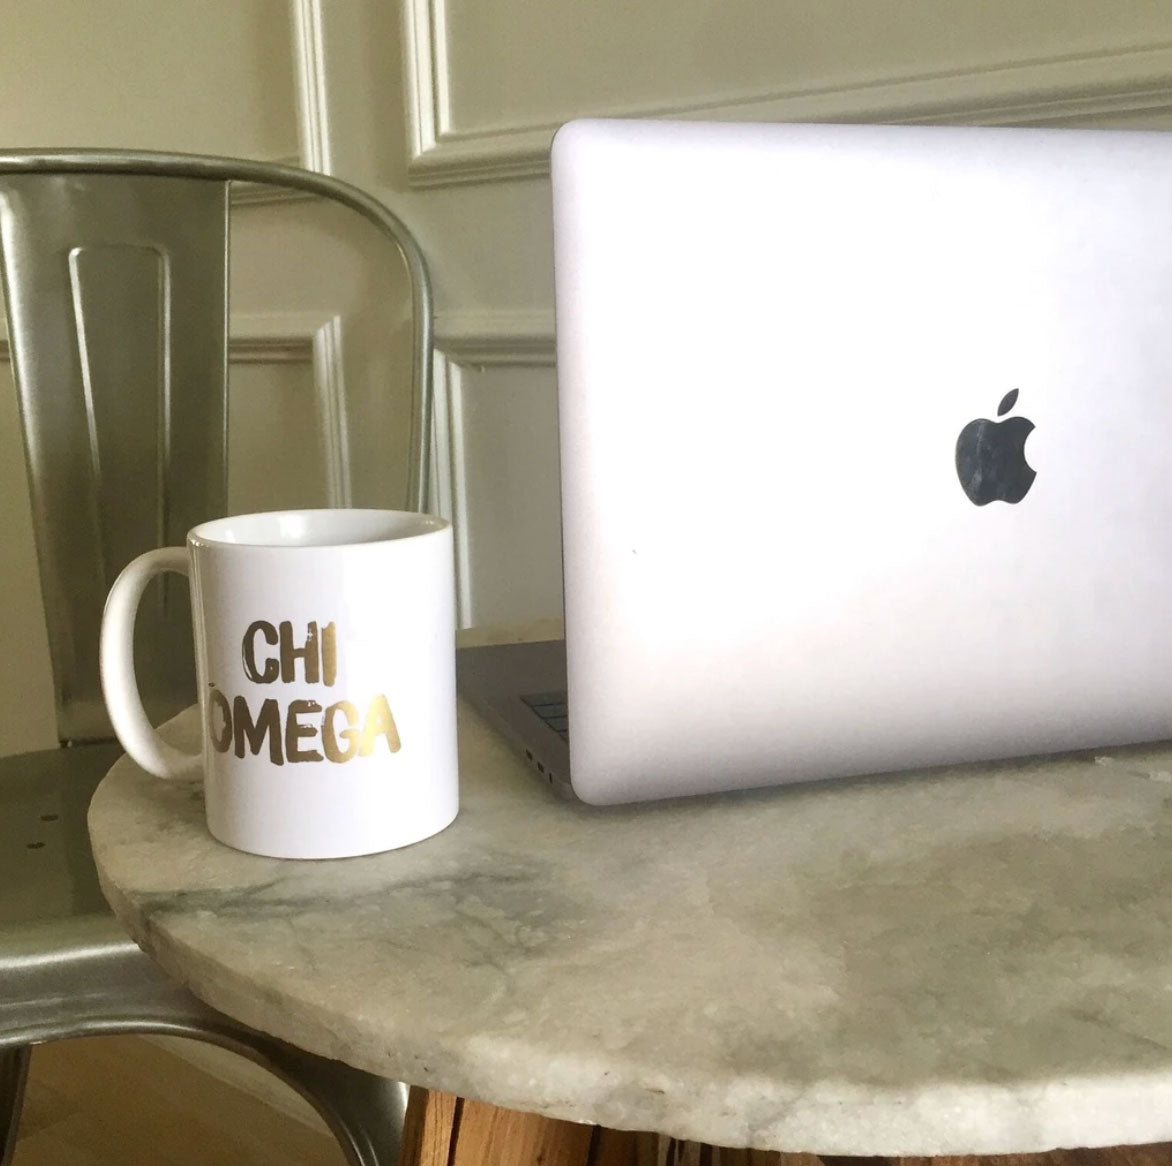 Sorority greek lettered mug next to laptop on table